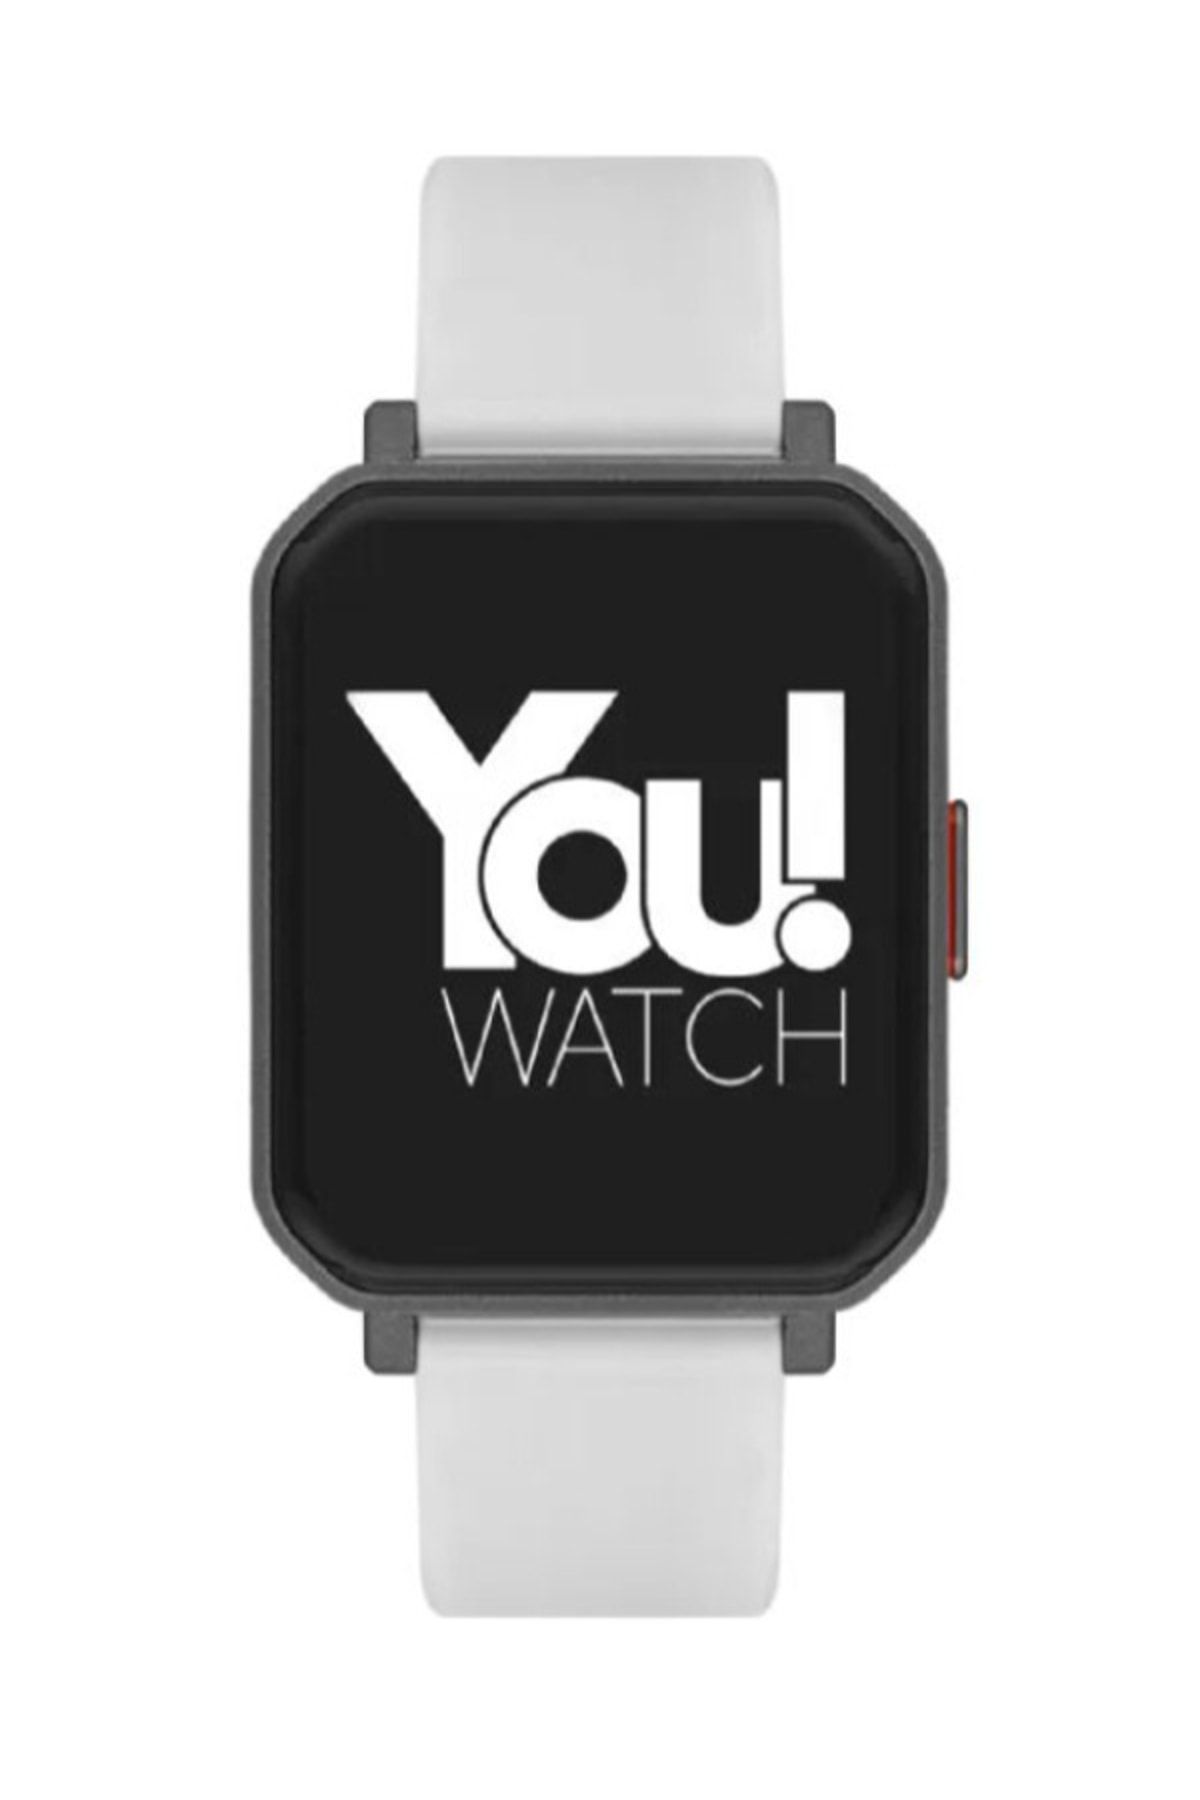 You Watch Youwatch F12-yf122 Siyah Kasa & Gri Silikon Kordon Unisex Akıllı Kol Saati Ios & Android Uyumlu